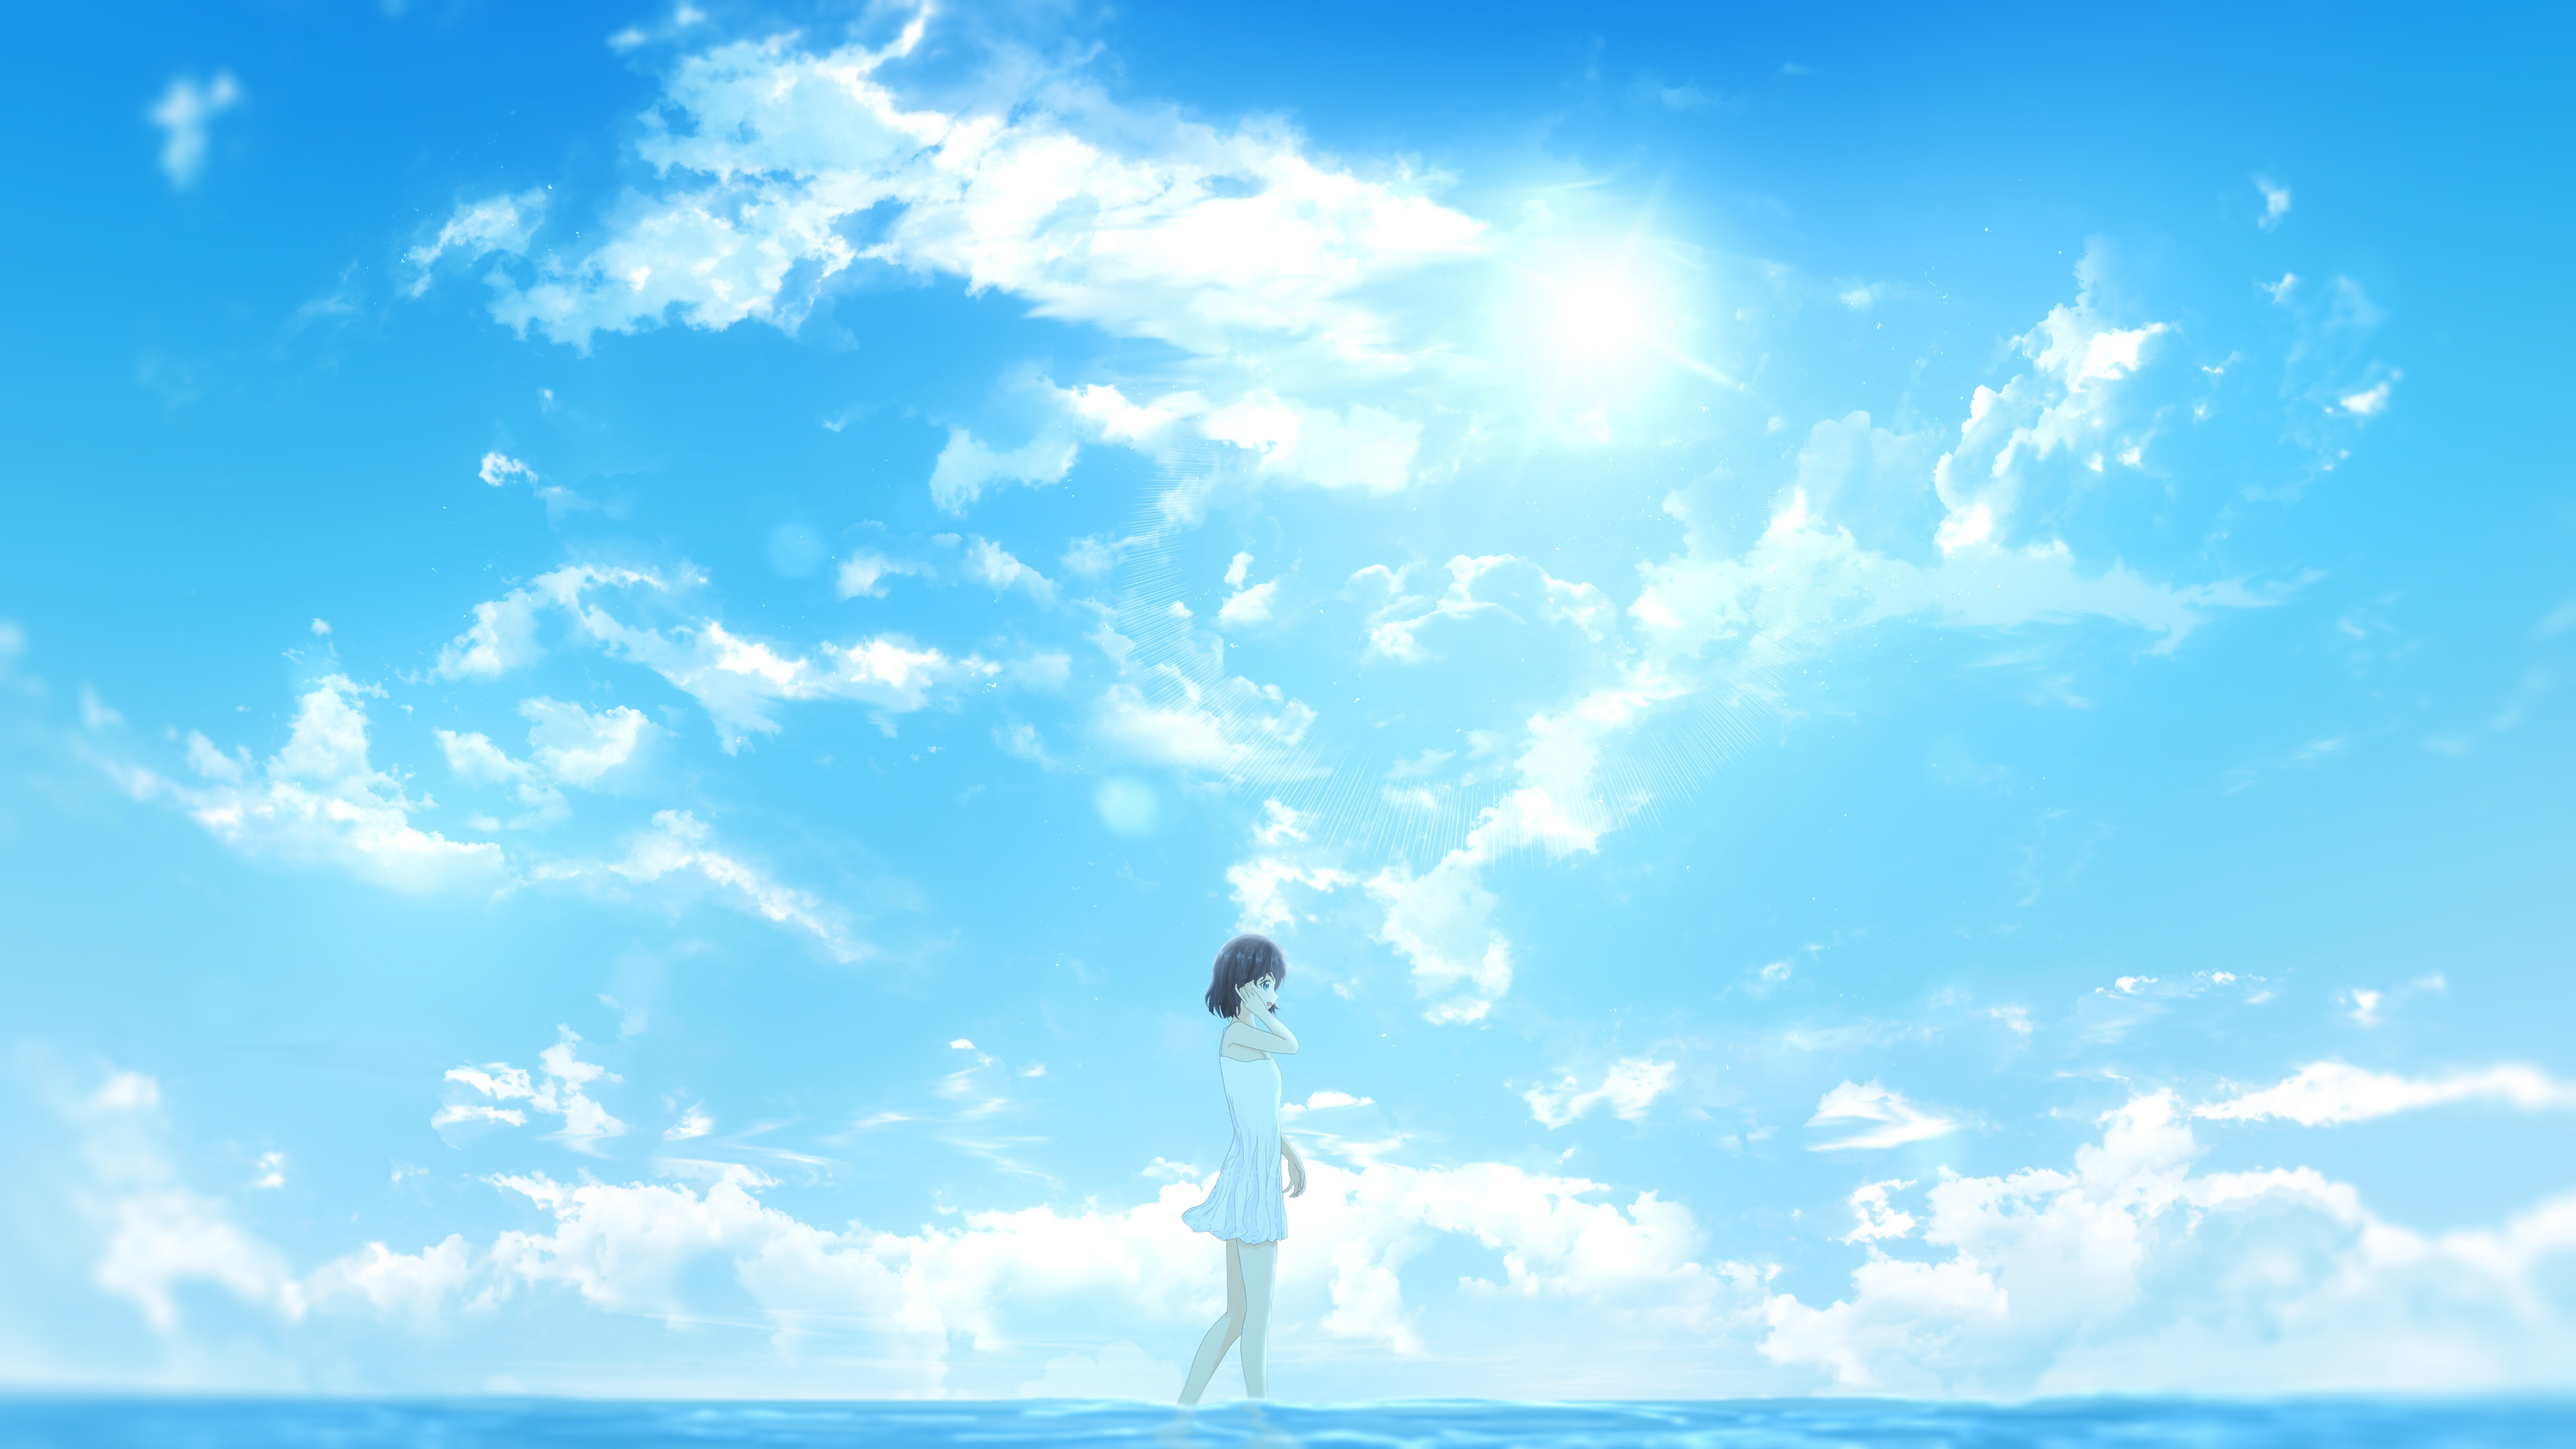 88+] Anime Sky Wallpapers - WallpaperSafari